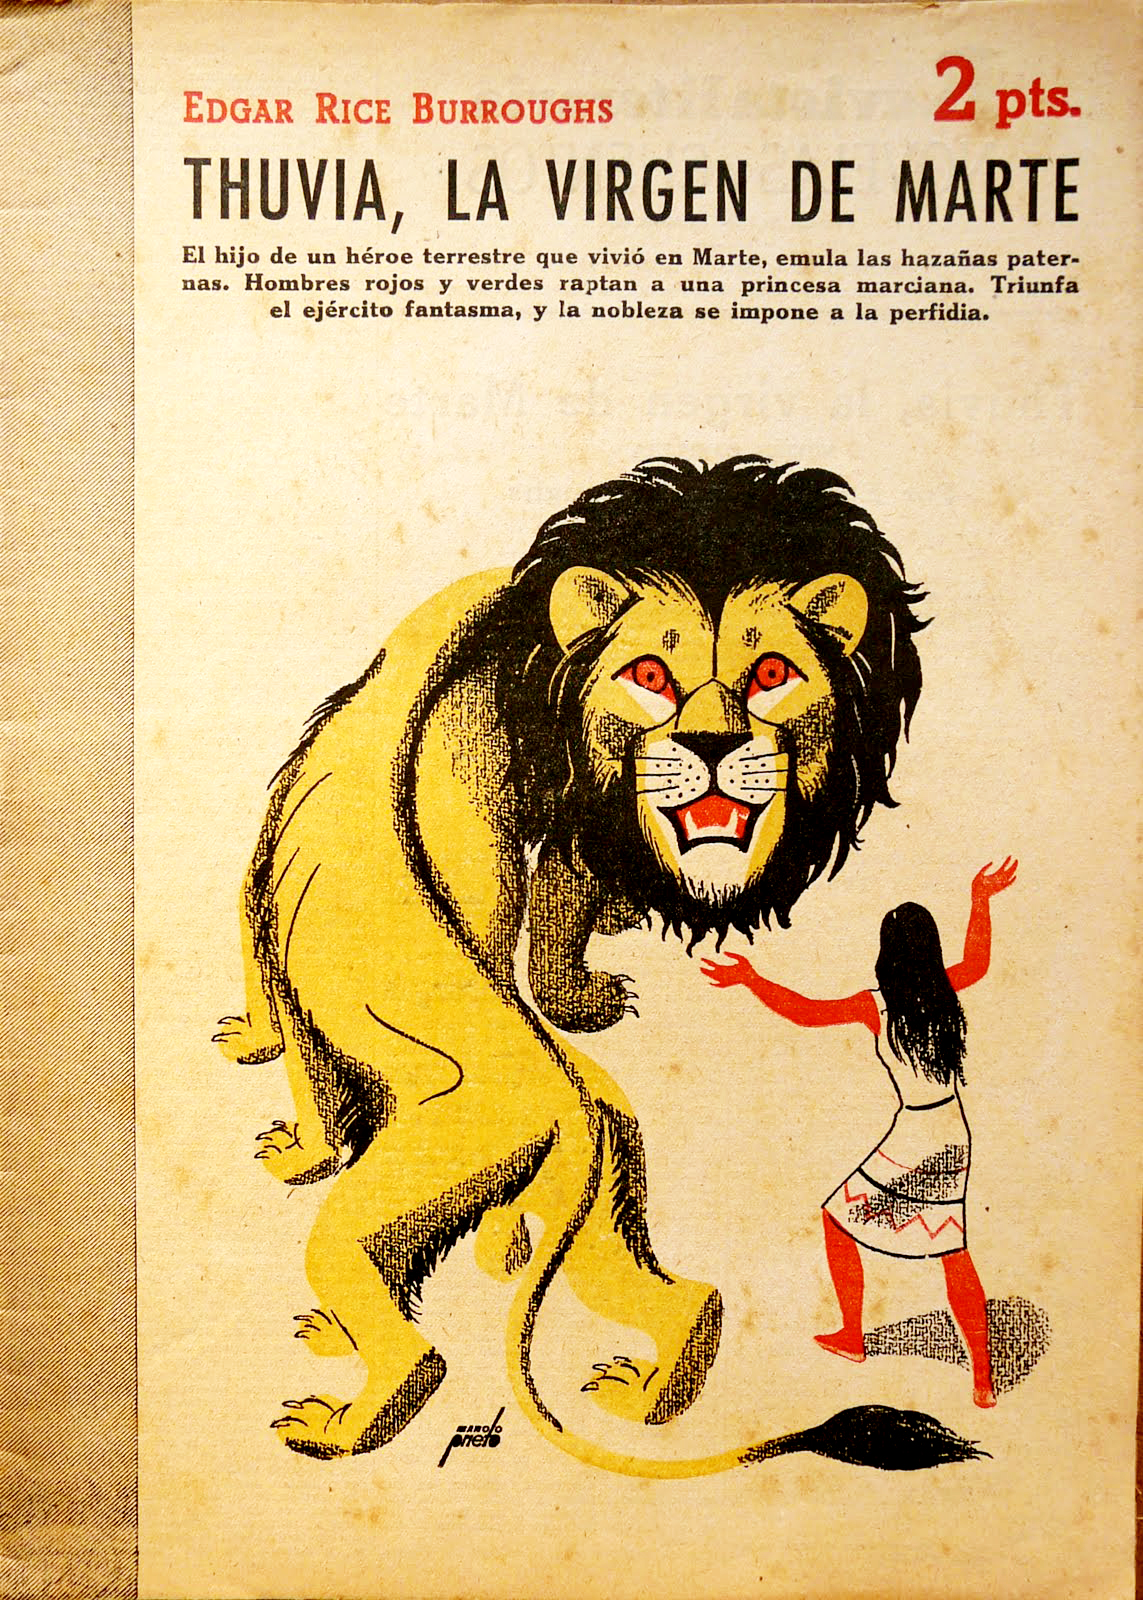 Manolo Pireto - Illustration for Edgar Rice Burroughs "Thuvia, Maid of Mars" (1949 Spanish Edition)